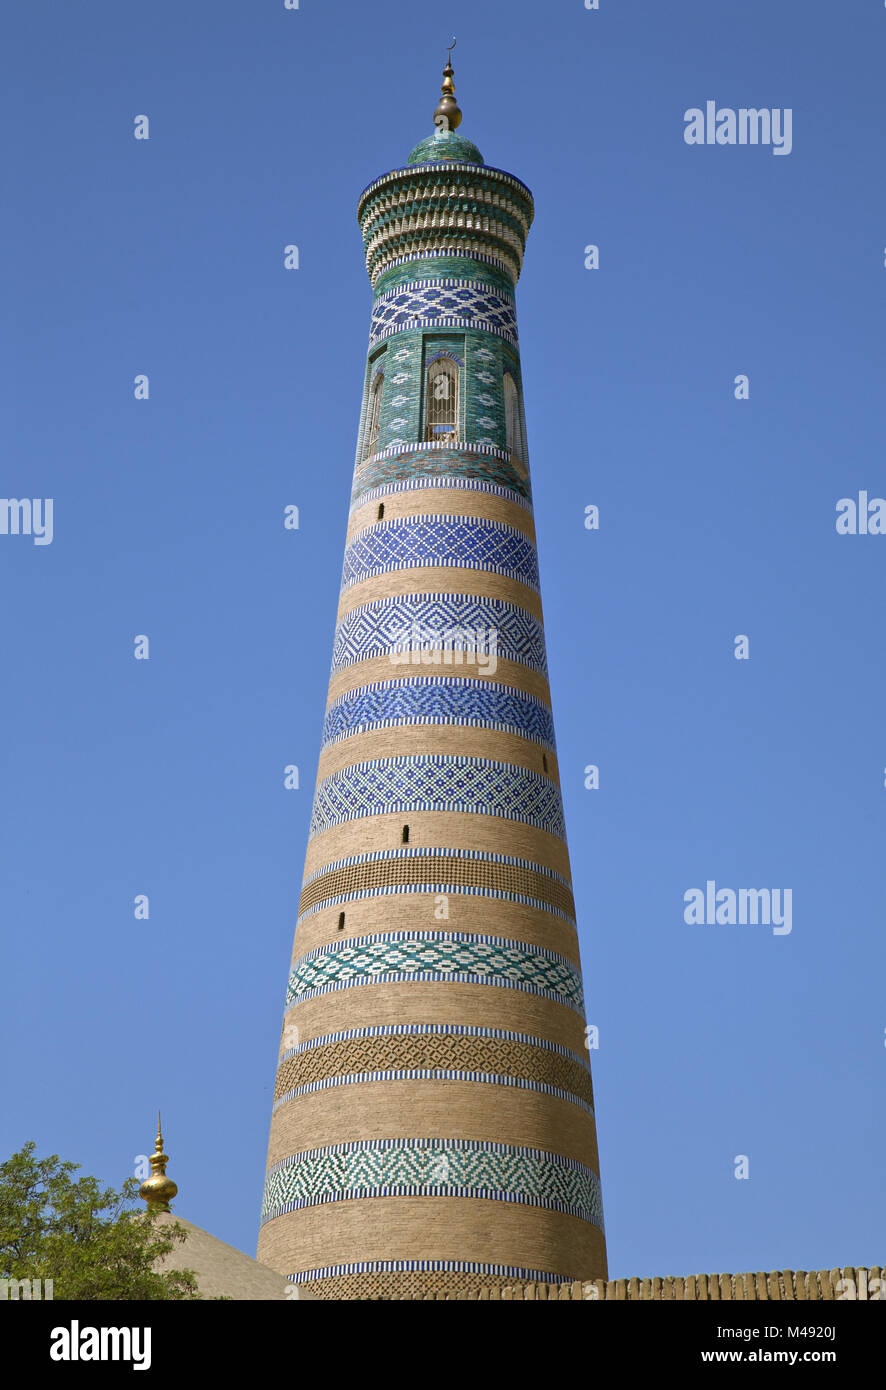 Minaret of Islam Khodja in Khiva Stock Photo